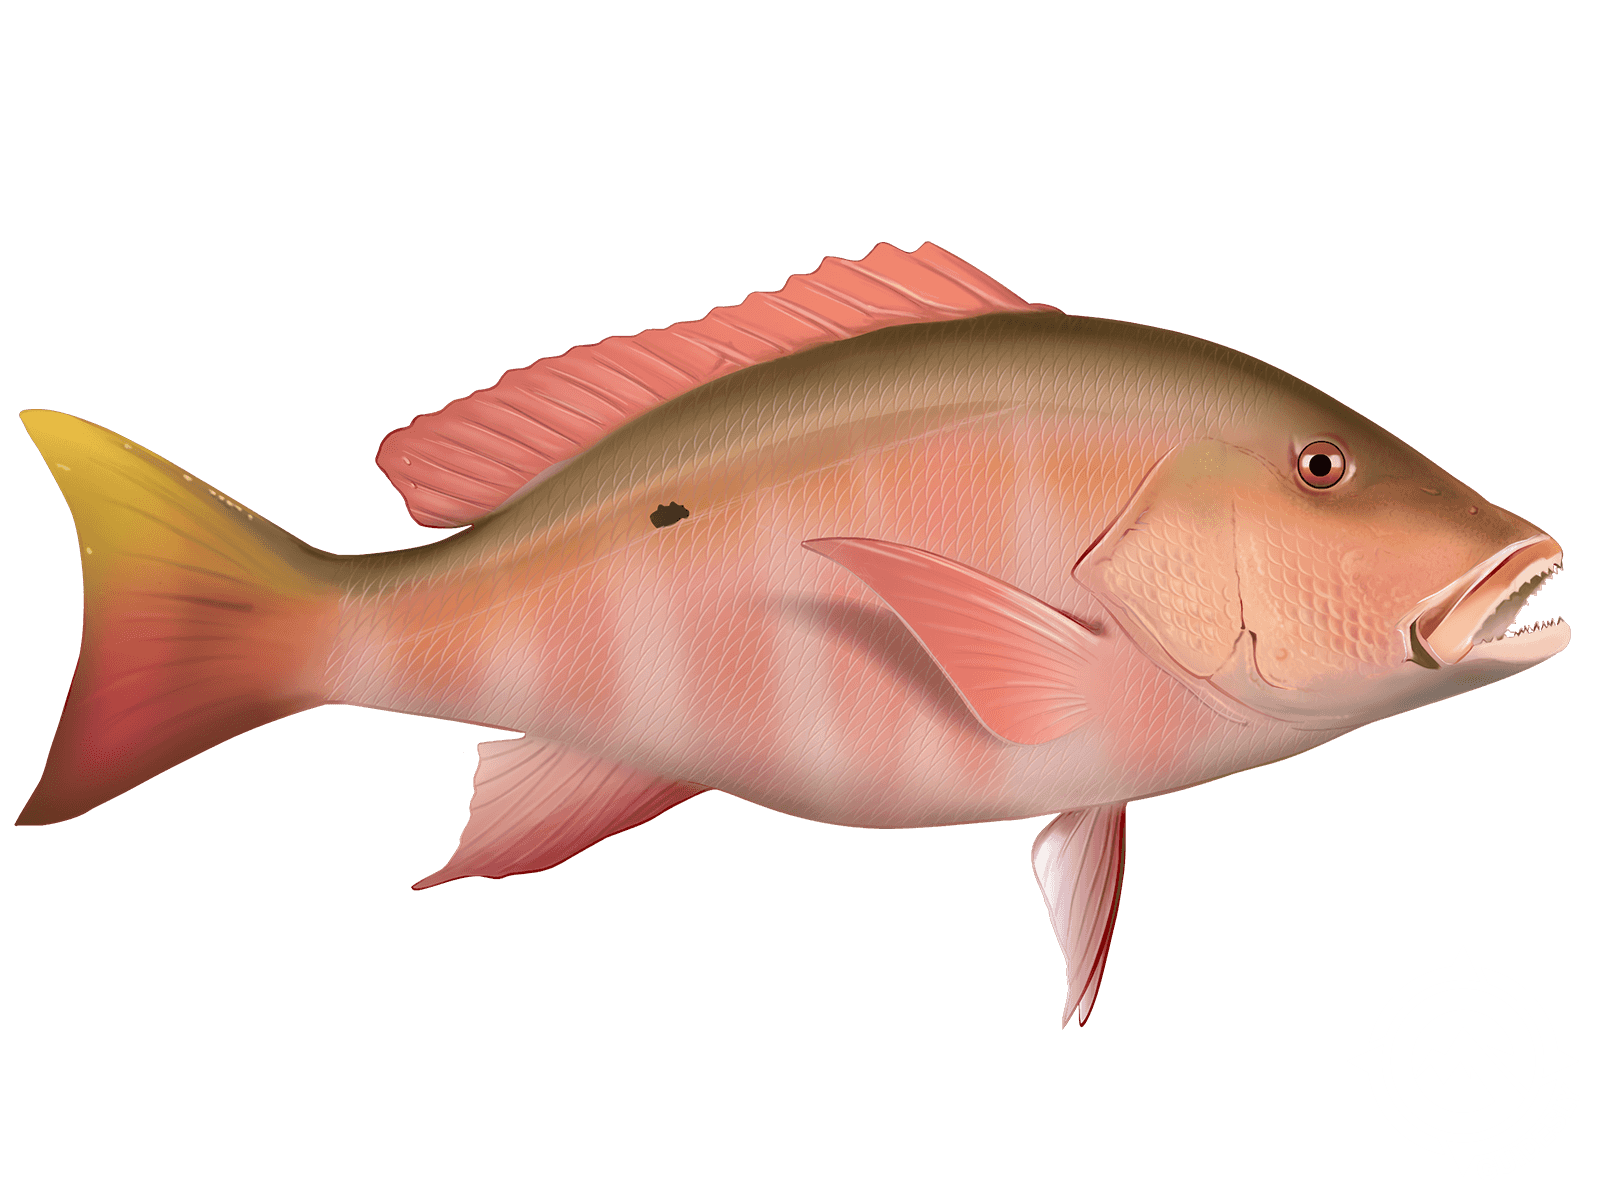 All Fishing Buy, Red Snapper fish identification, Habitats